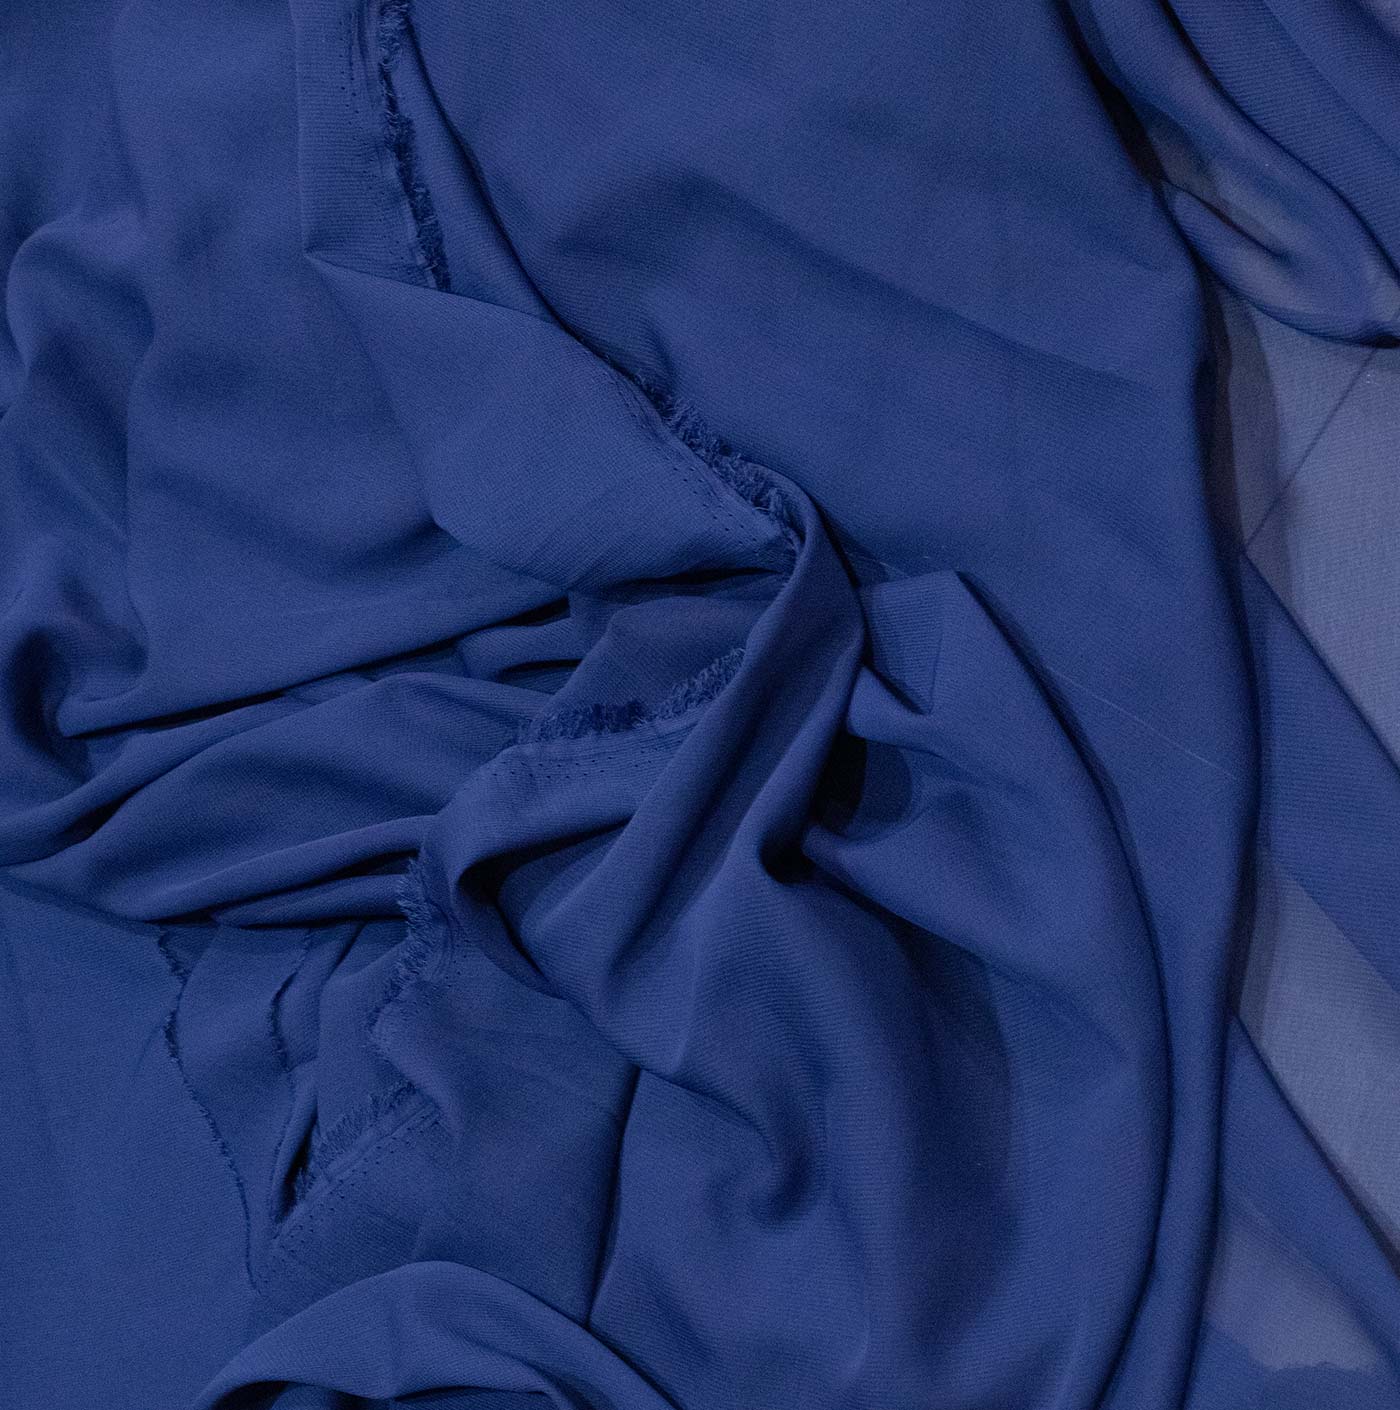 Navy Blue Silk Chiffon Fabric